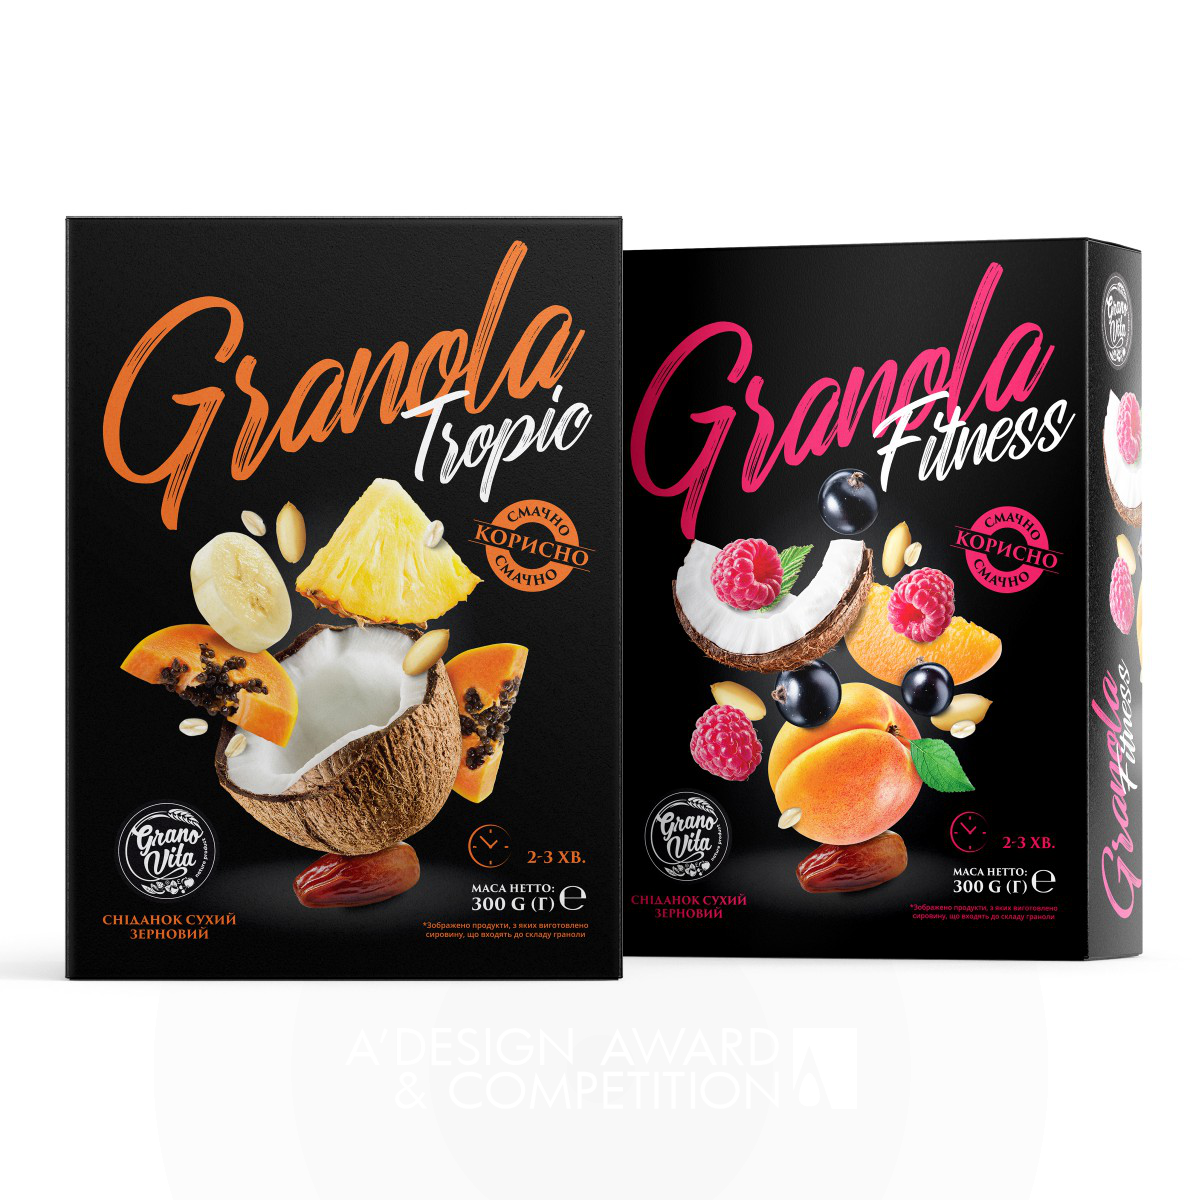 Granovita Granola Packaging by Olha Takhtarova